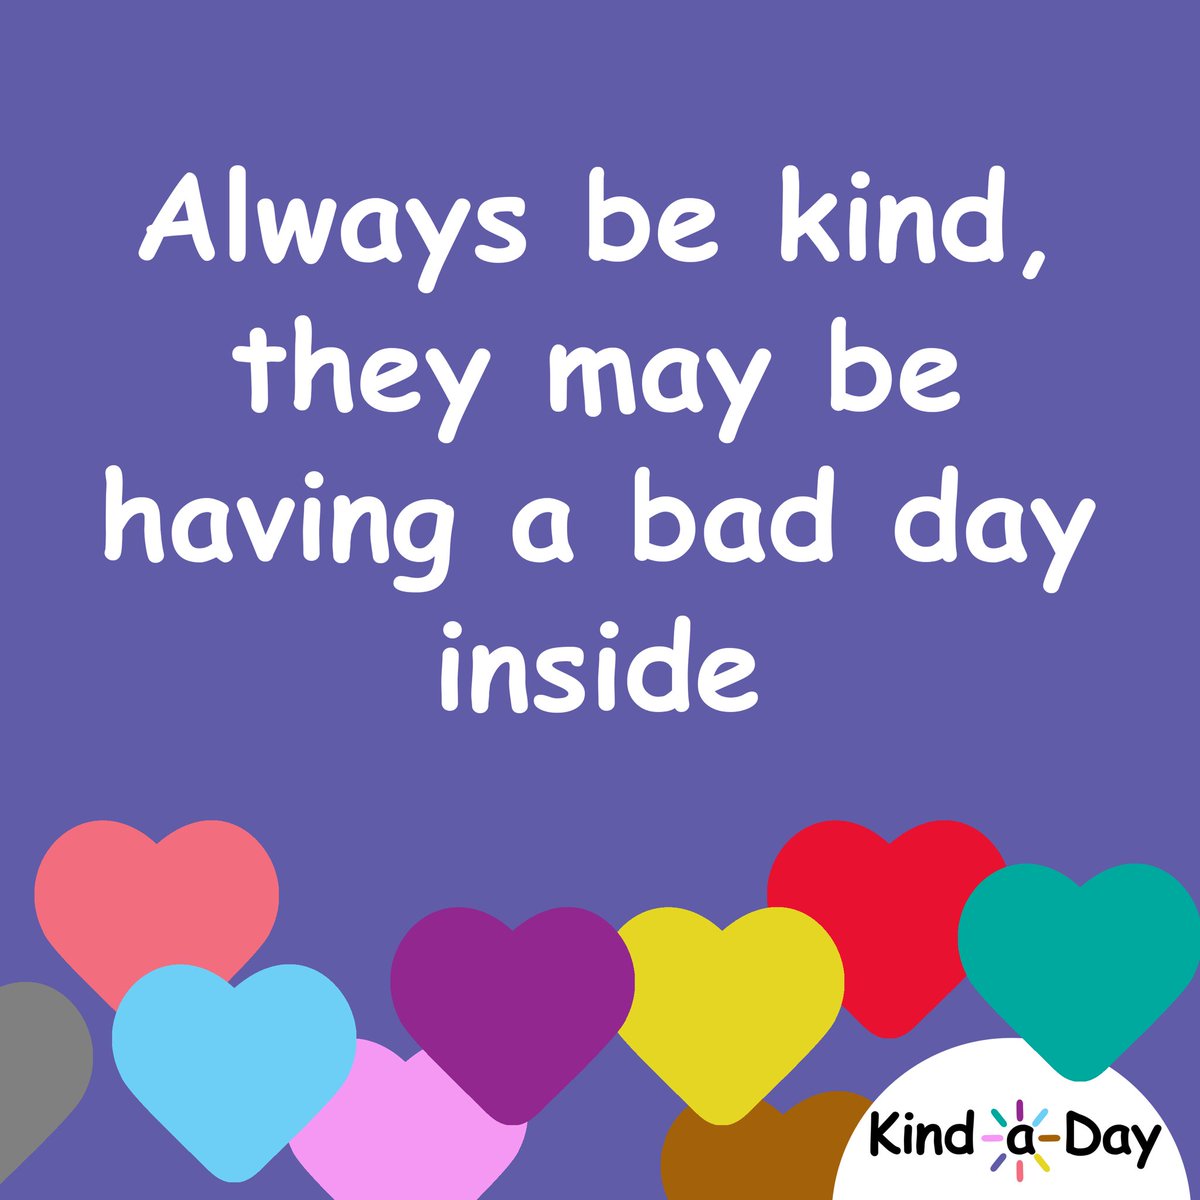 Always be kind, they may be having a bad day inside. 💕
 
#AlwaysBeKind #MakeSomeonesDayBetter #MakeTheWorldABetterPlace #BeKind #kind #kindness #KindLife #ActsOfKindness #SpreadKindness #KindnessMatters #ChooseKindness #KindnessWins #KindaDay #KindnessAlways #KindnessEveryday